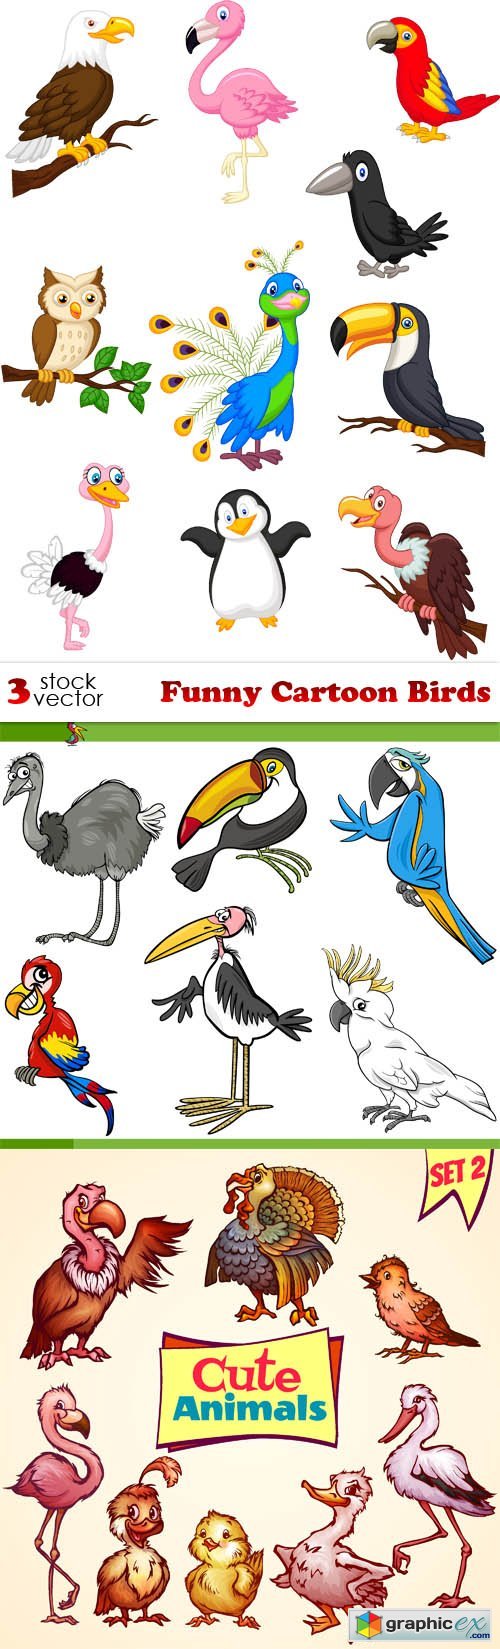 Vectors - Funny Cartoon Birds